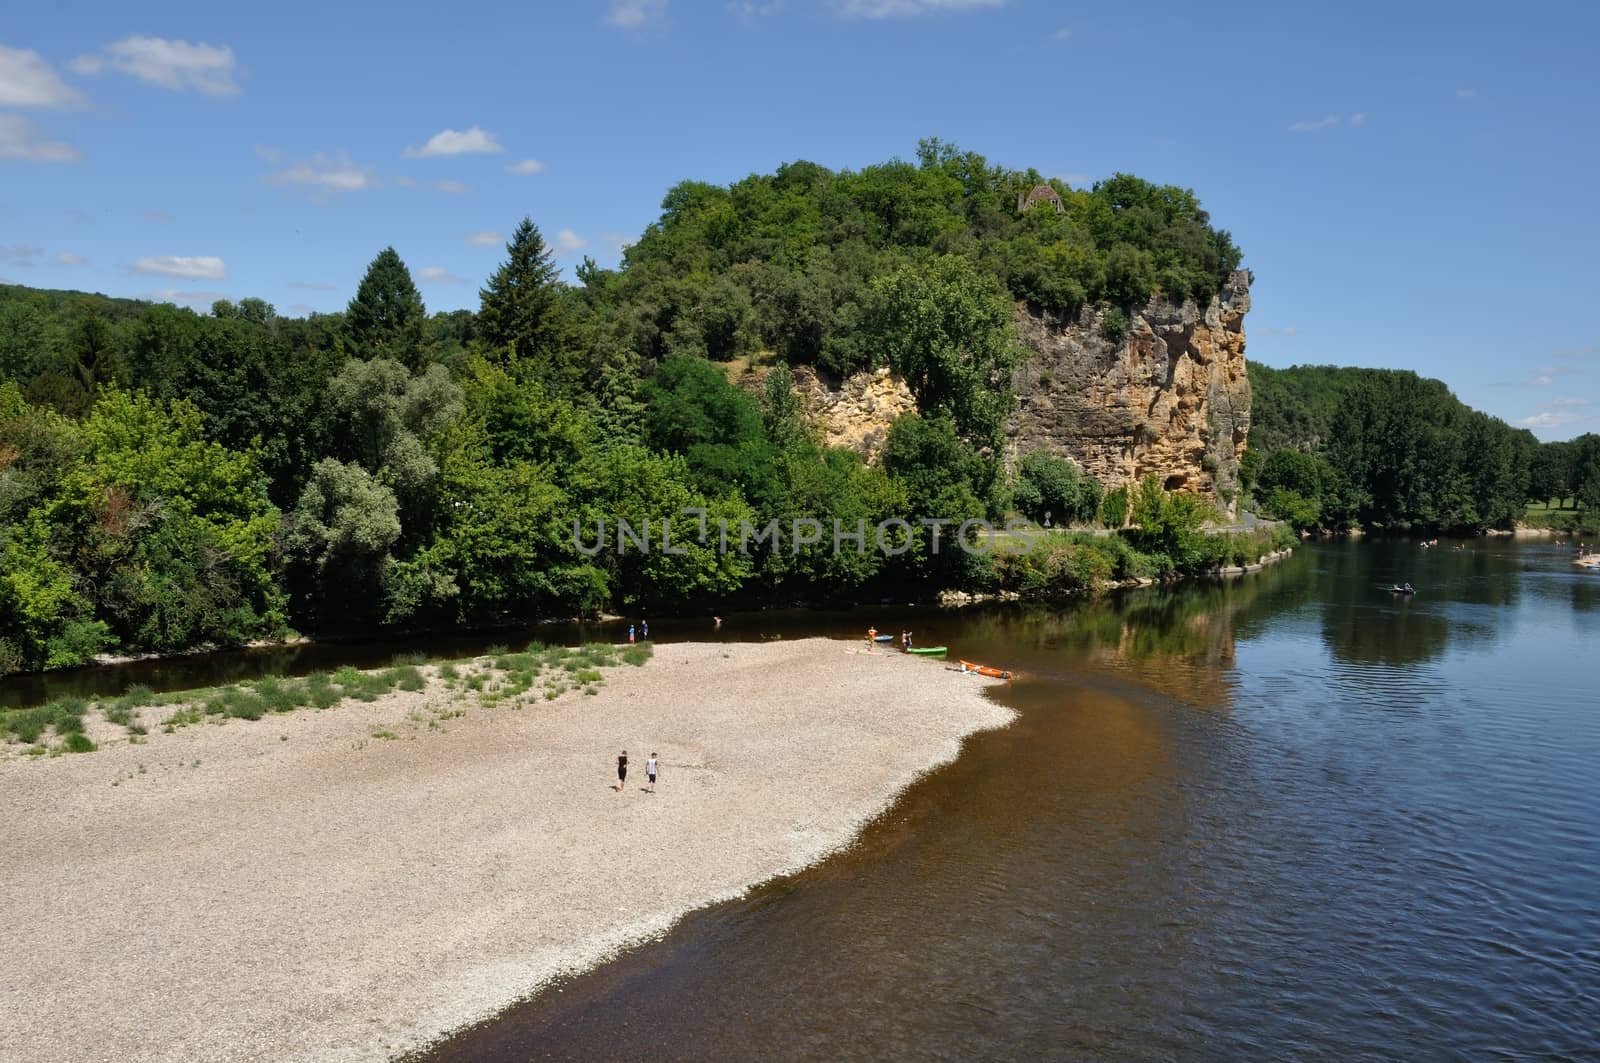 Dordogne river by BZH22